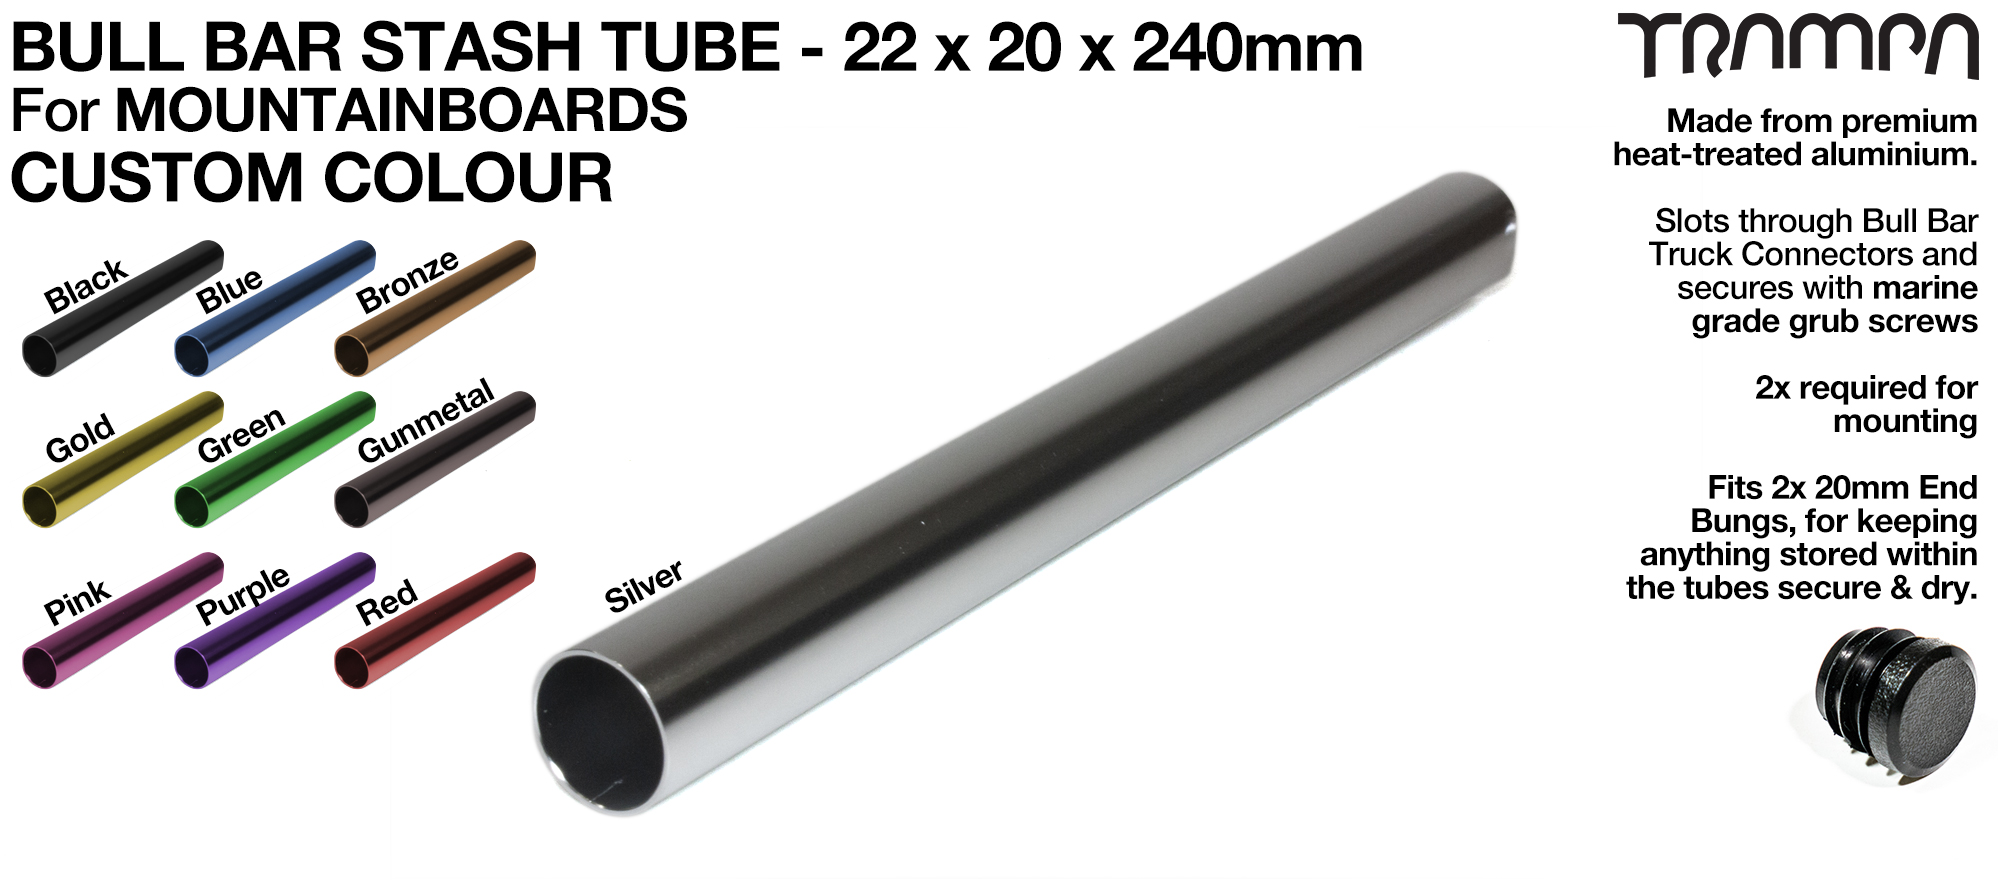 Mountainboard Bull Bar Hollow Aluminium Stash Tube - CUSTOM 22x20x240mm 